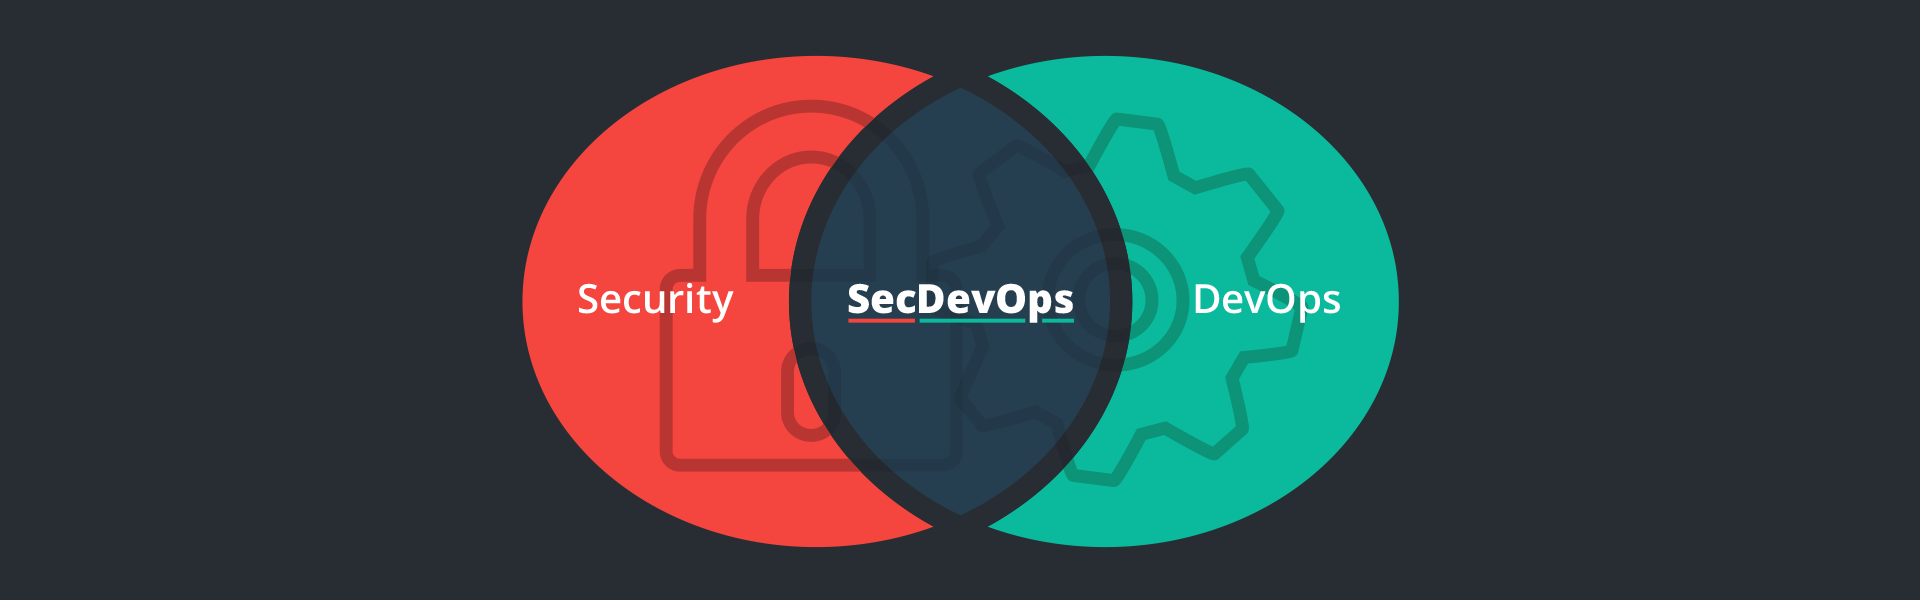 Three Ways to Manage Security in DevOps